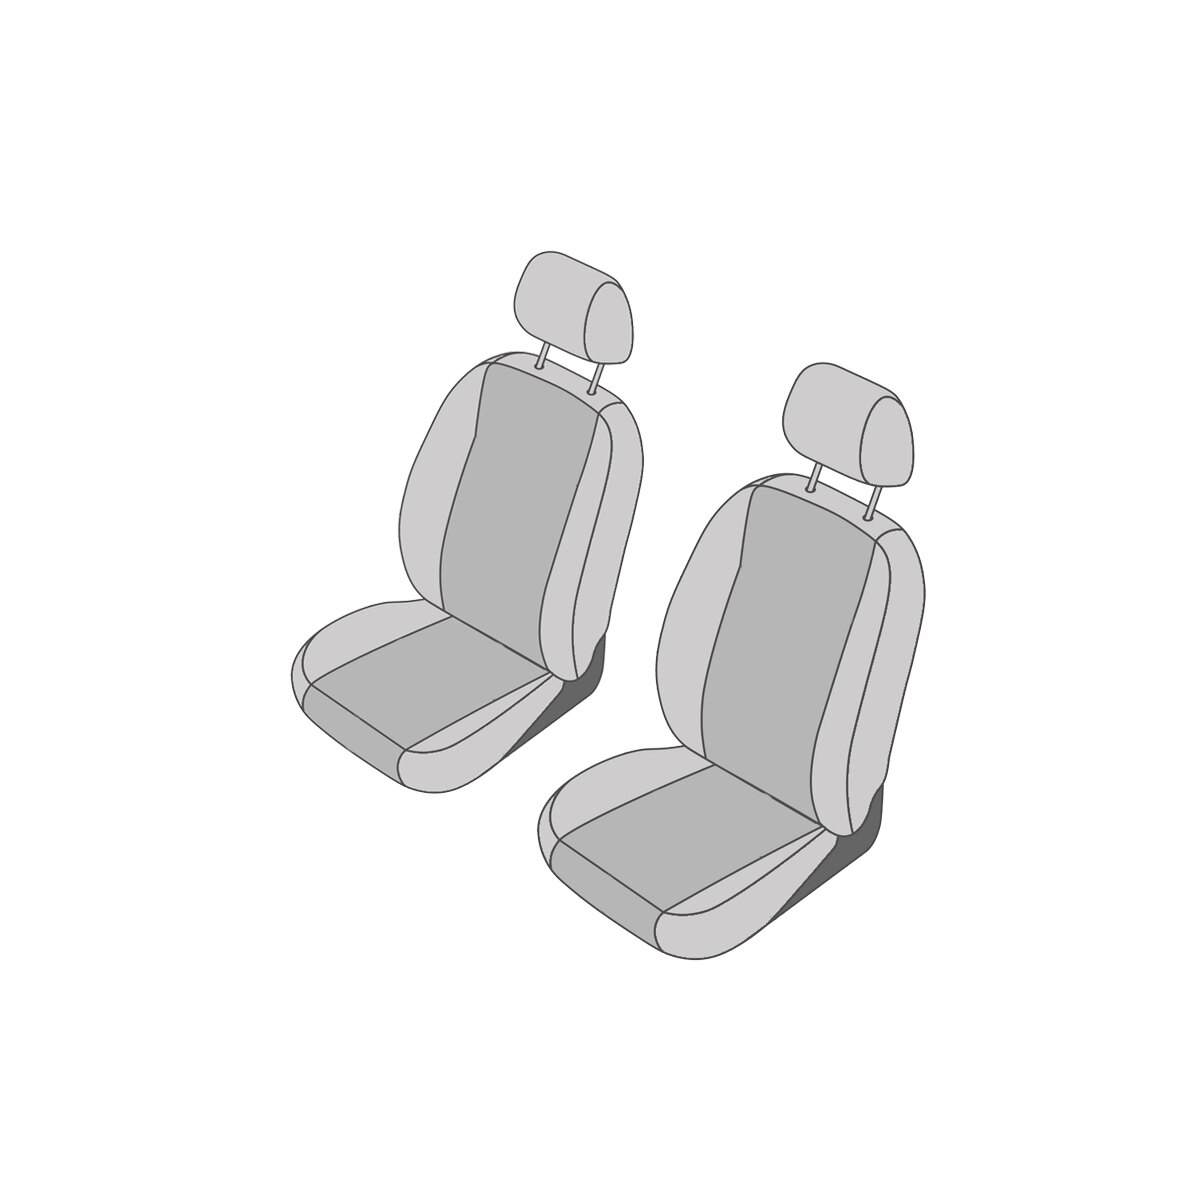 Auto Schonbezug Sitzbezug Sitzbezüge für Renault Clio Bj.05